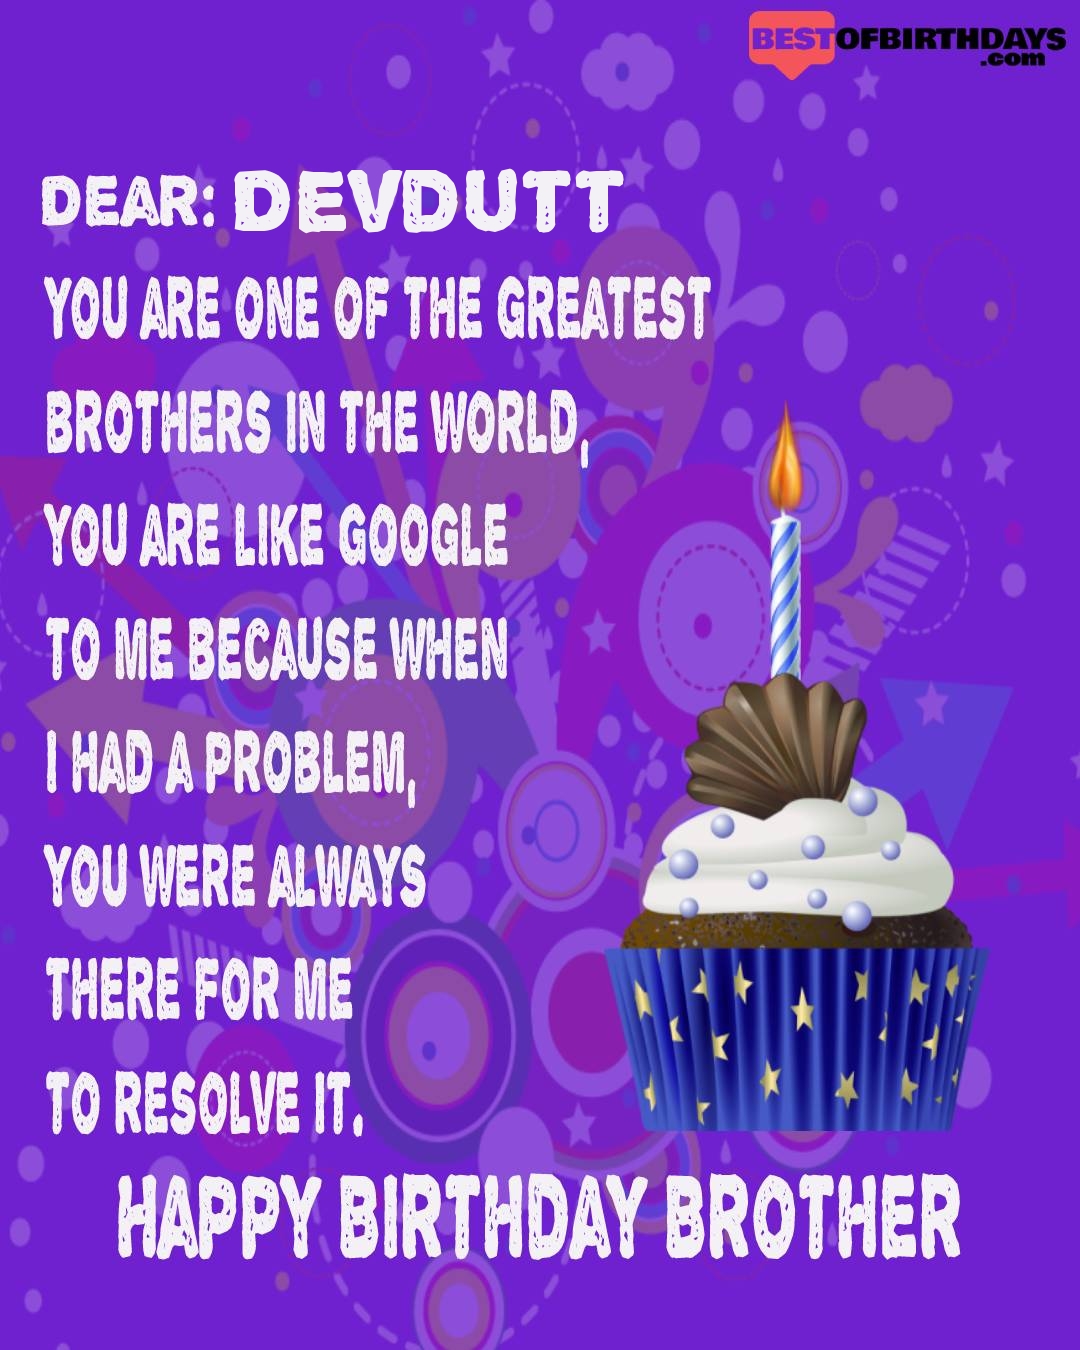 Happy birthday devdutt bhai brother bro